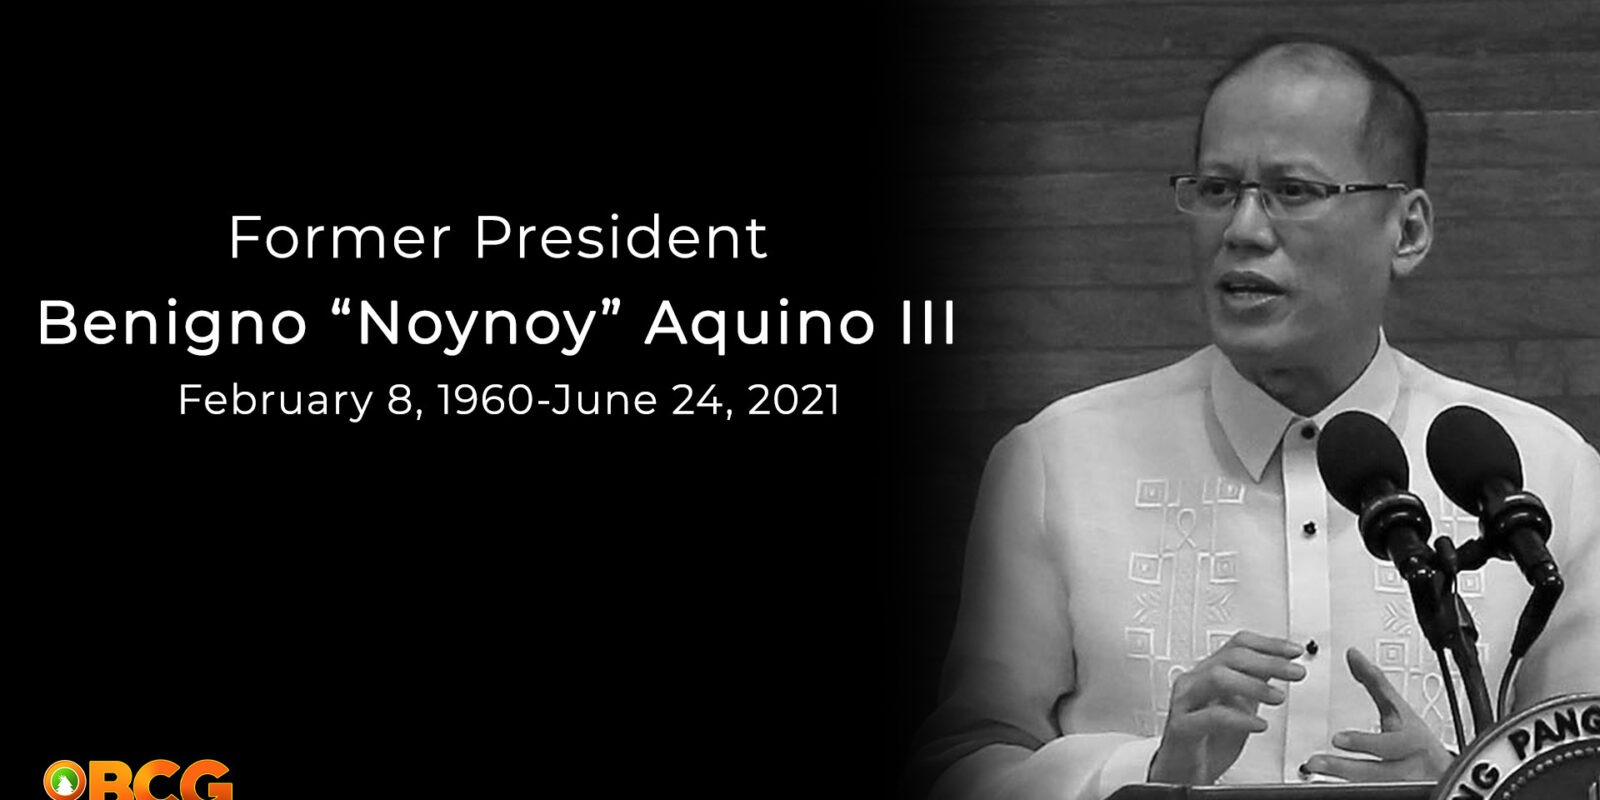 Ninoy Aquino President